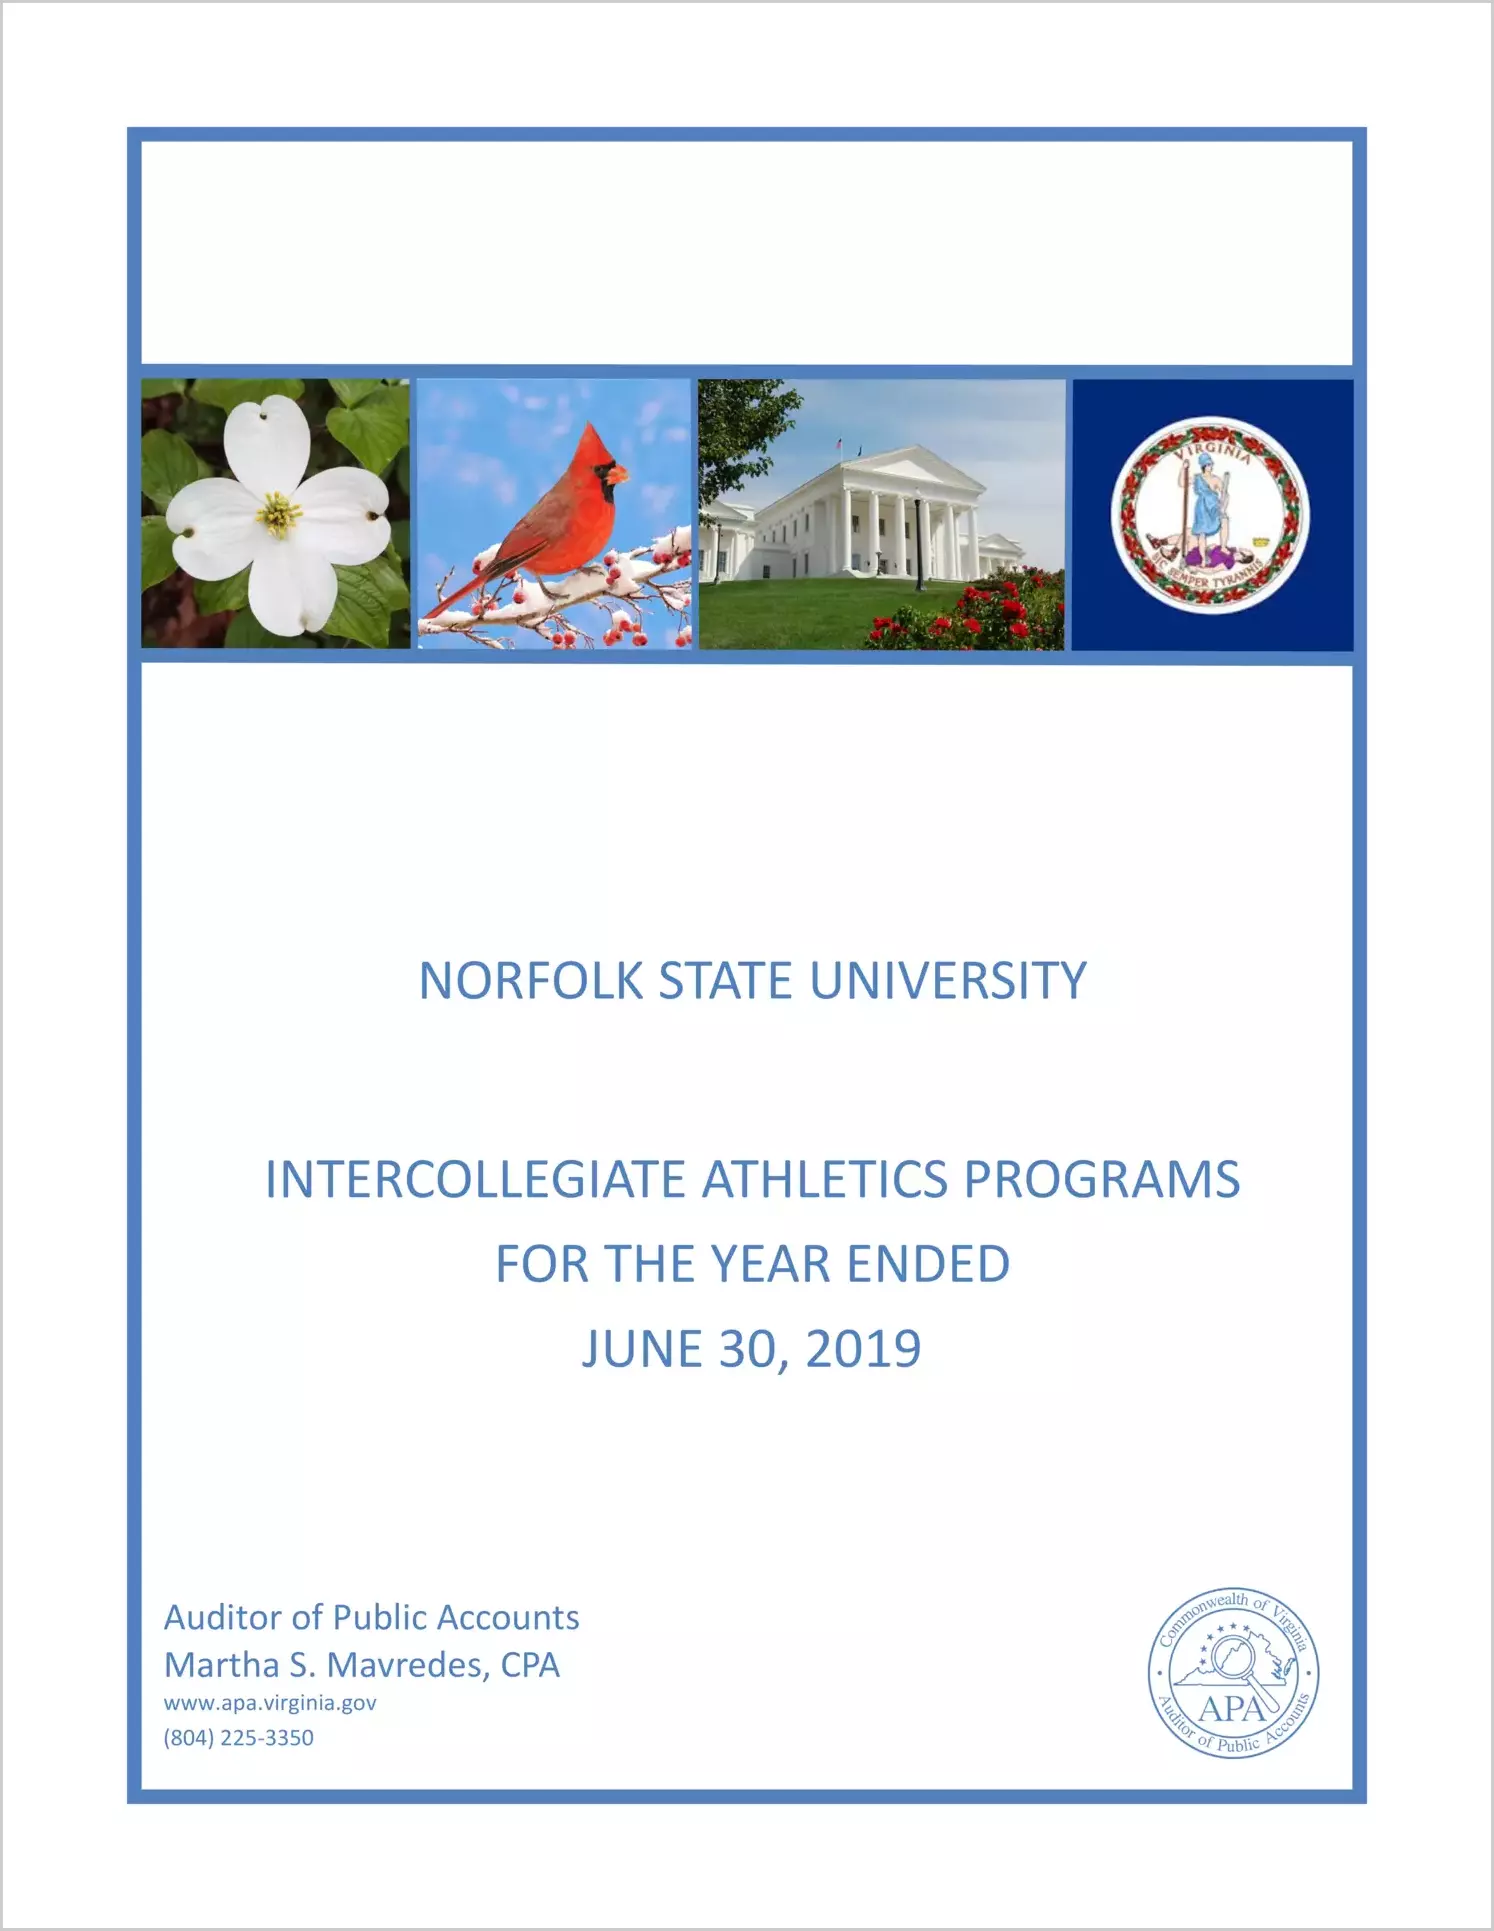 Norfolk State University Intercollegiate Athletics Programs for the year ended June 30, 2019